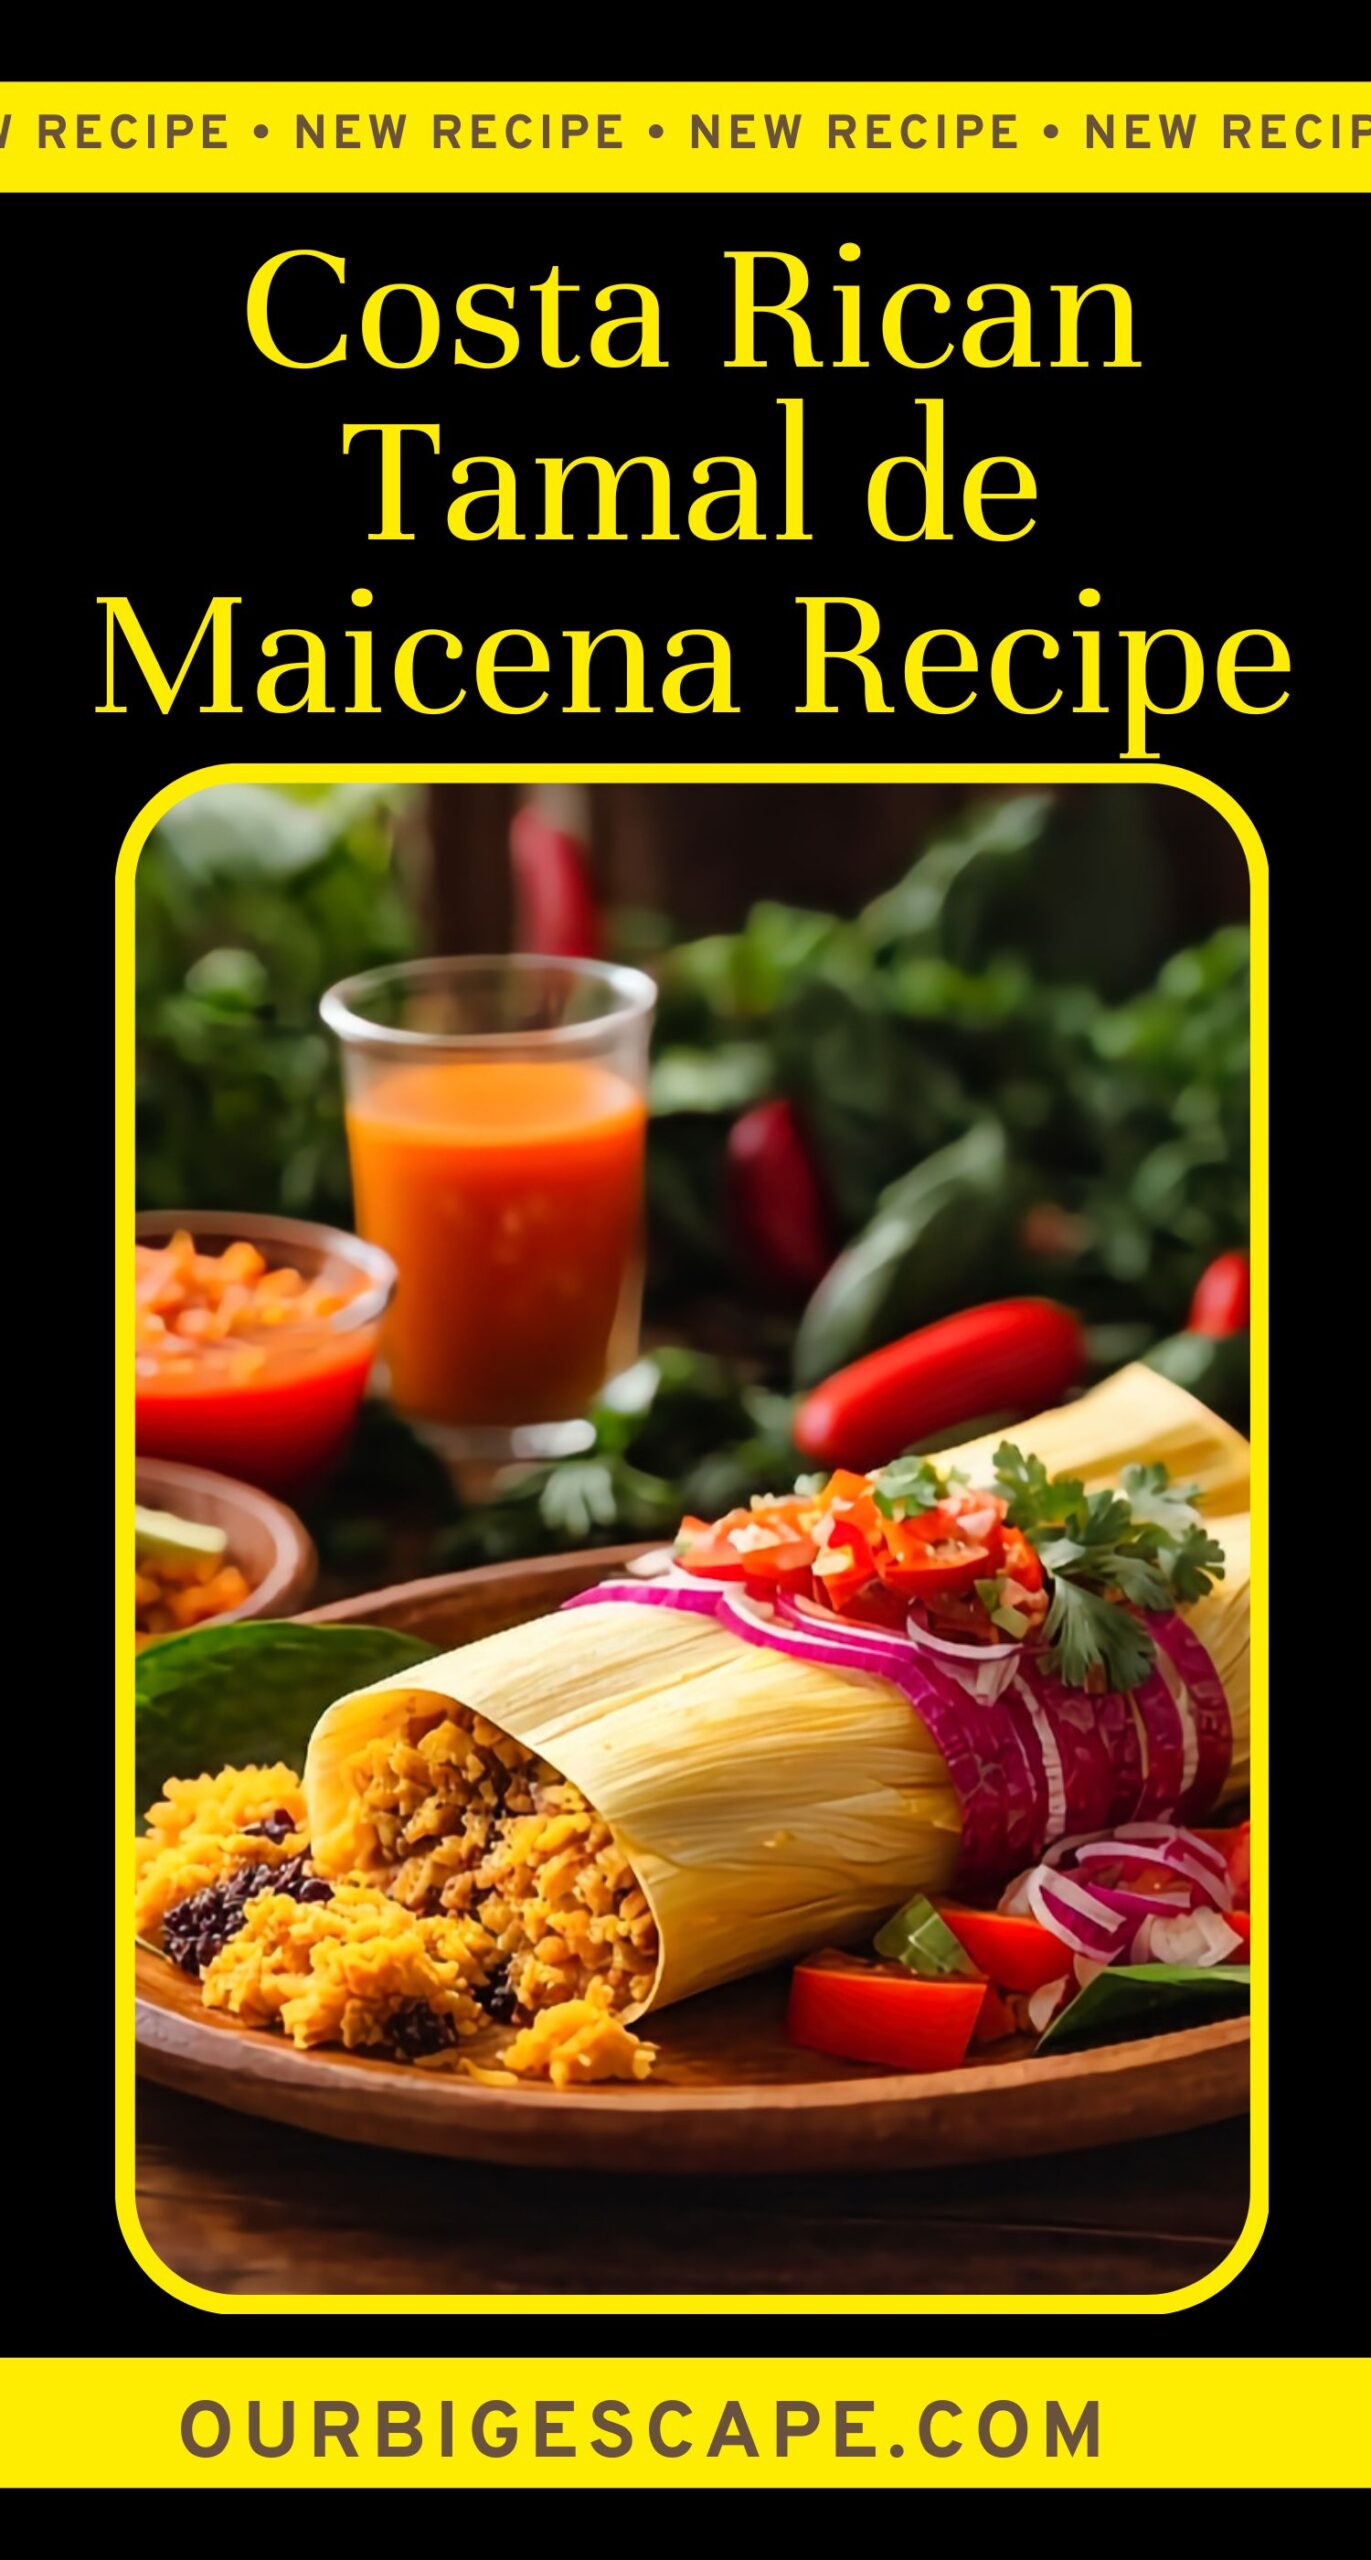 2. Costa Rican Tamal de Maicena Recipe